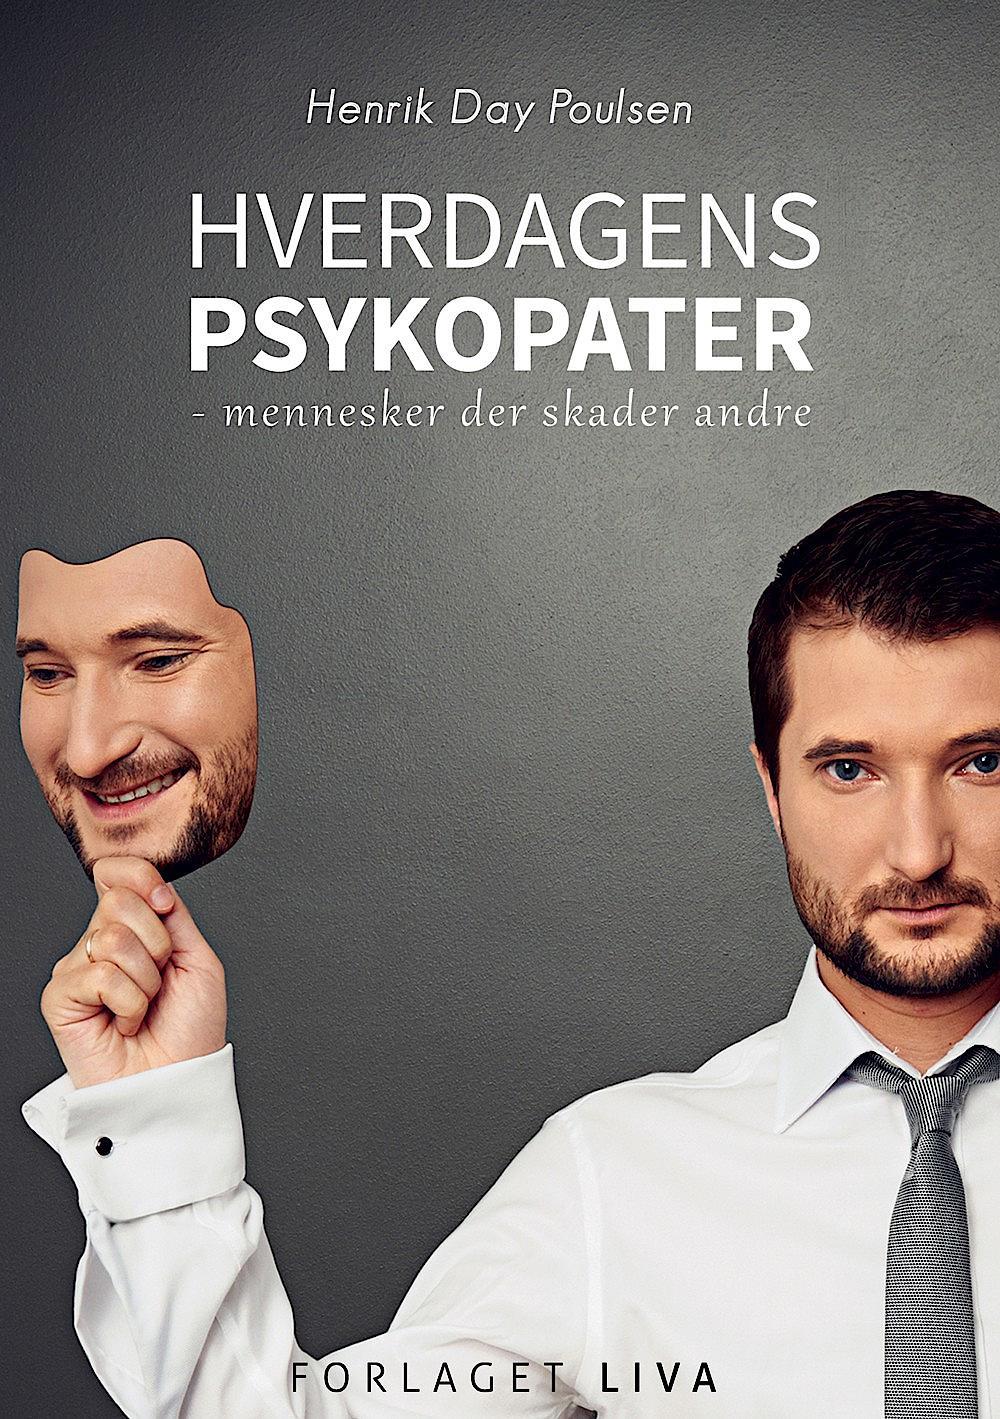 Poulsen H.D.; Hverdagens psykopater – mennesker der skader andre. København. Forlaget LIVA. 2014 175 sider. Pris 249 kr. ISBN: 978-87-996276-8-4